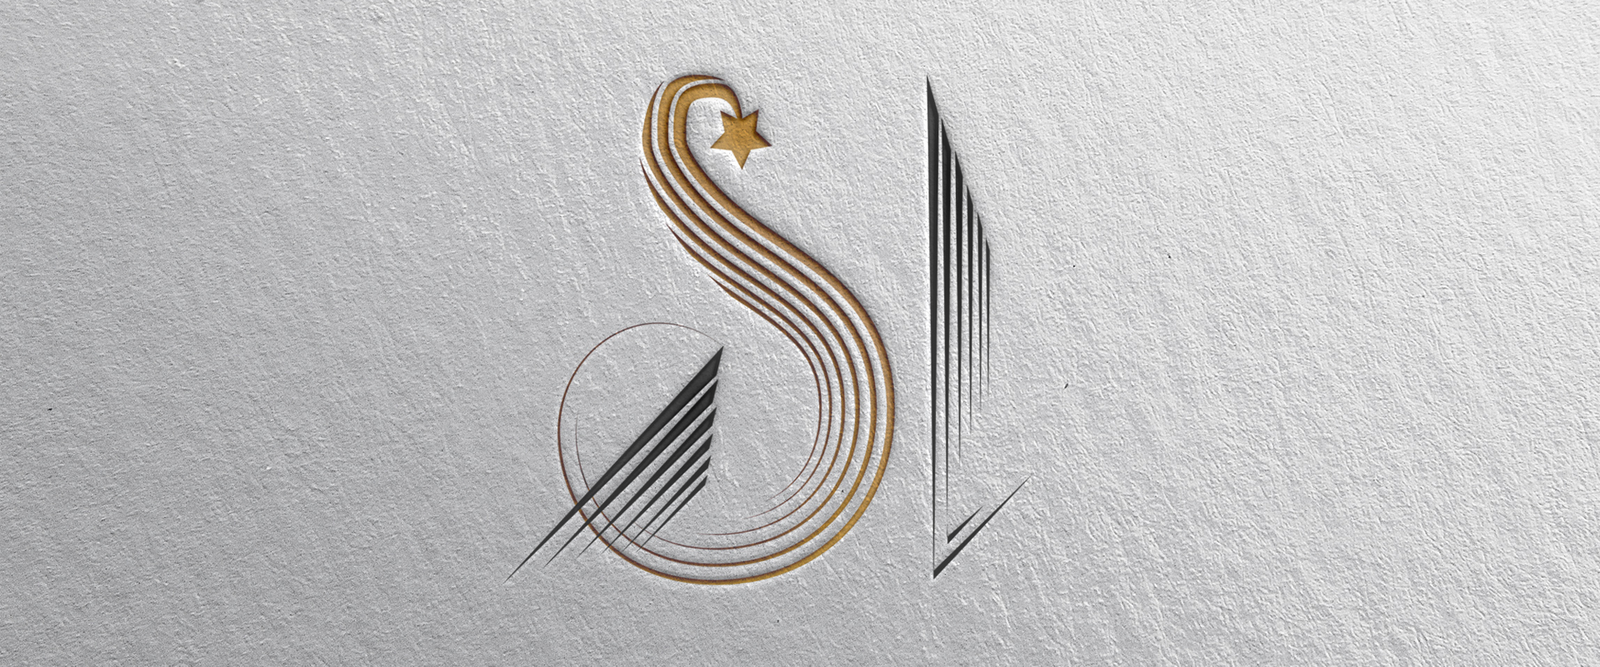 esl-logo-design-hotpress